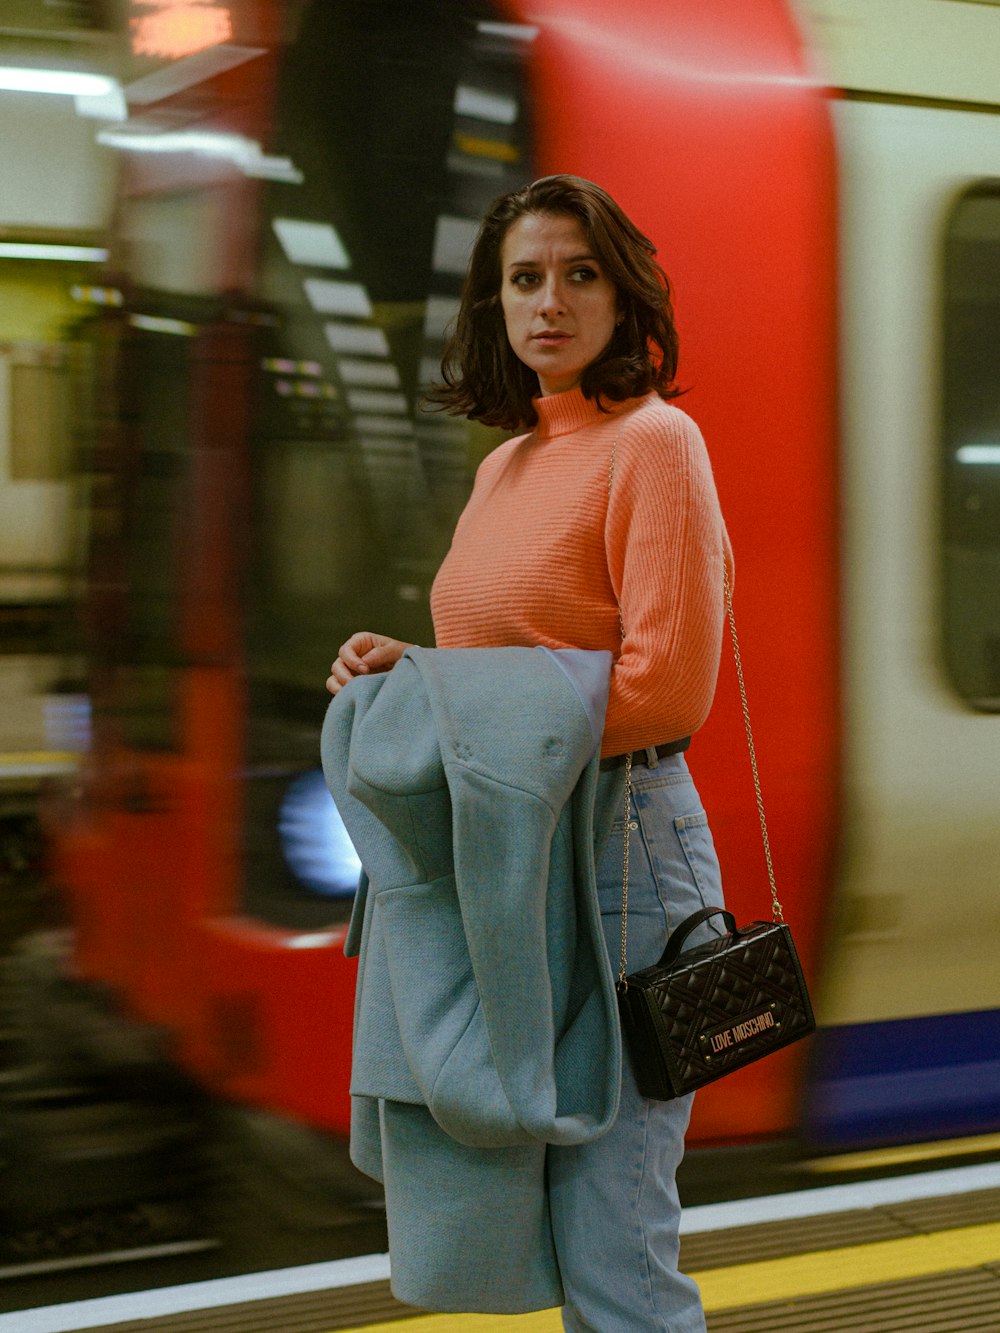 a woman standing on a train platform holding a purse